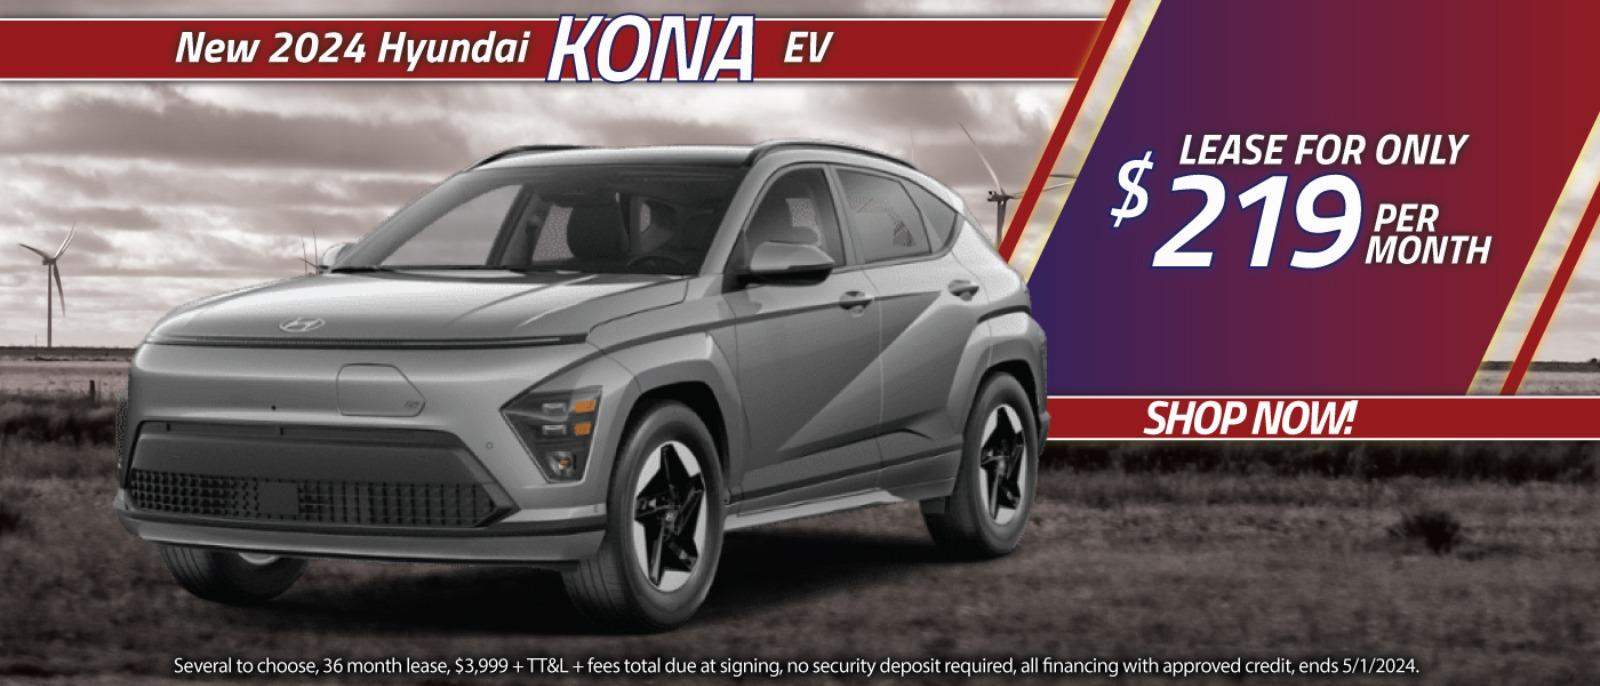 New 2024 Hyundai Kona